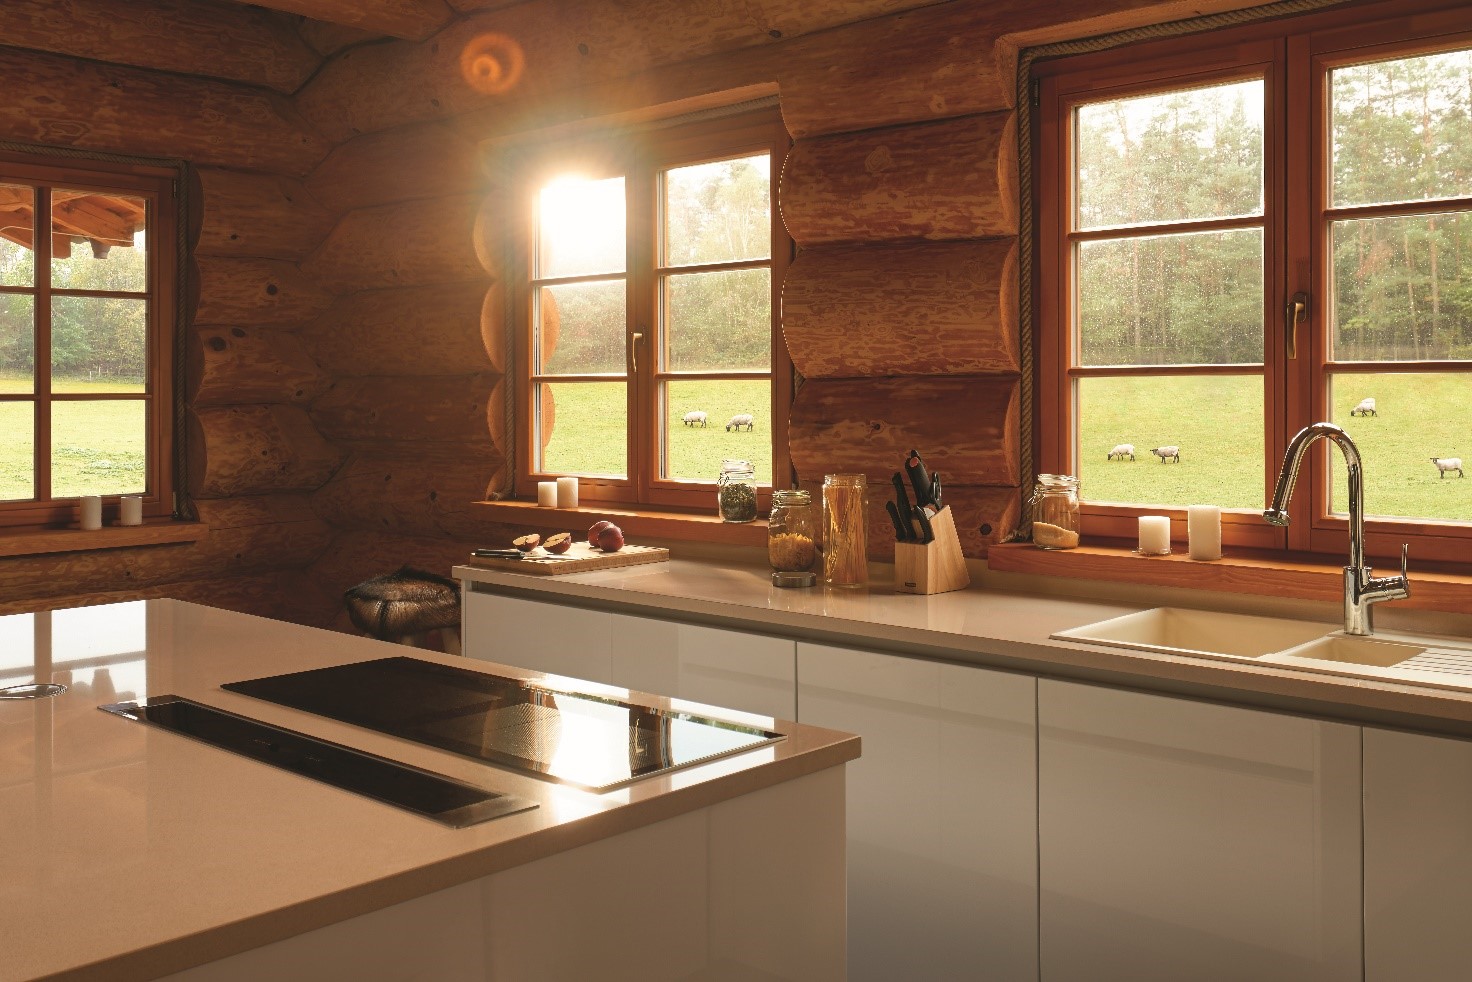 Bright creamy kitchen with TechniStone® kitchen countertop in a wooden log